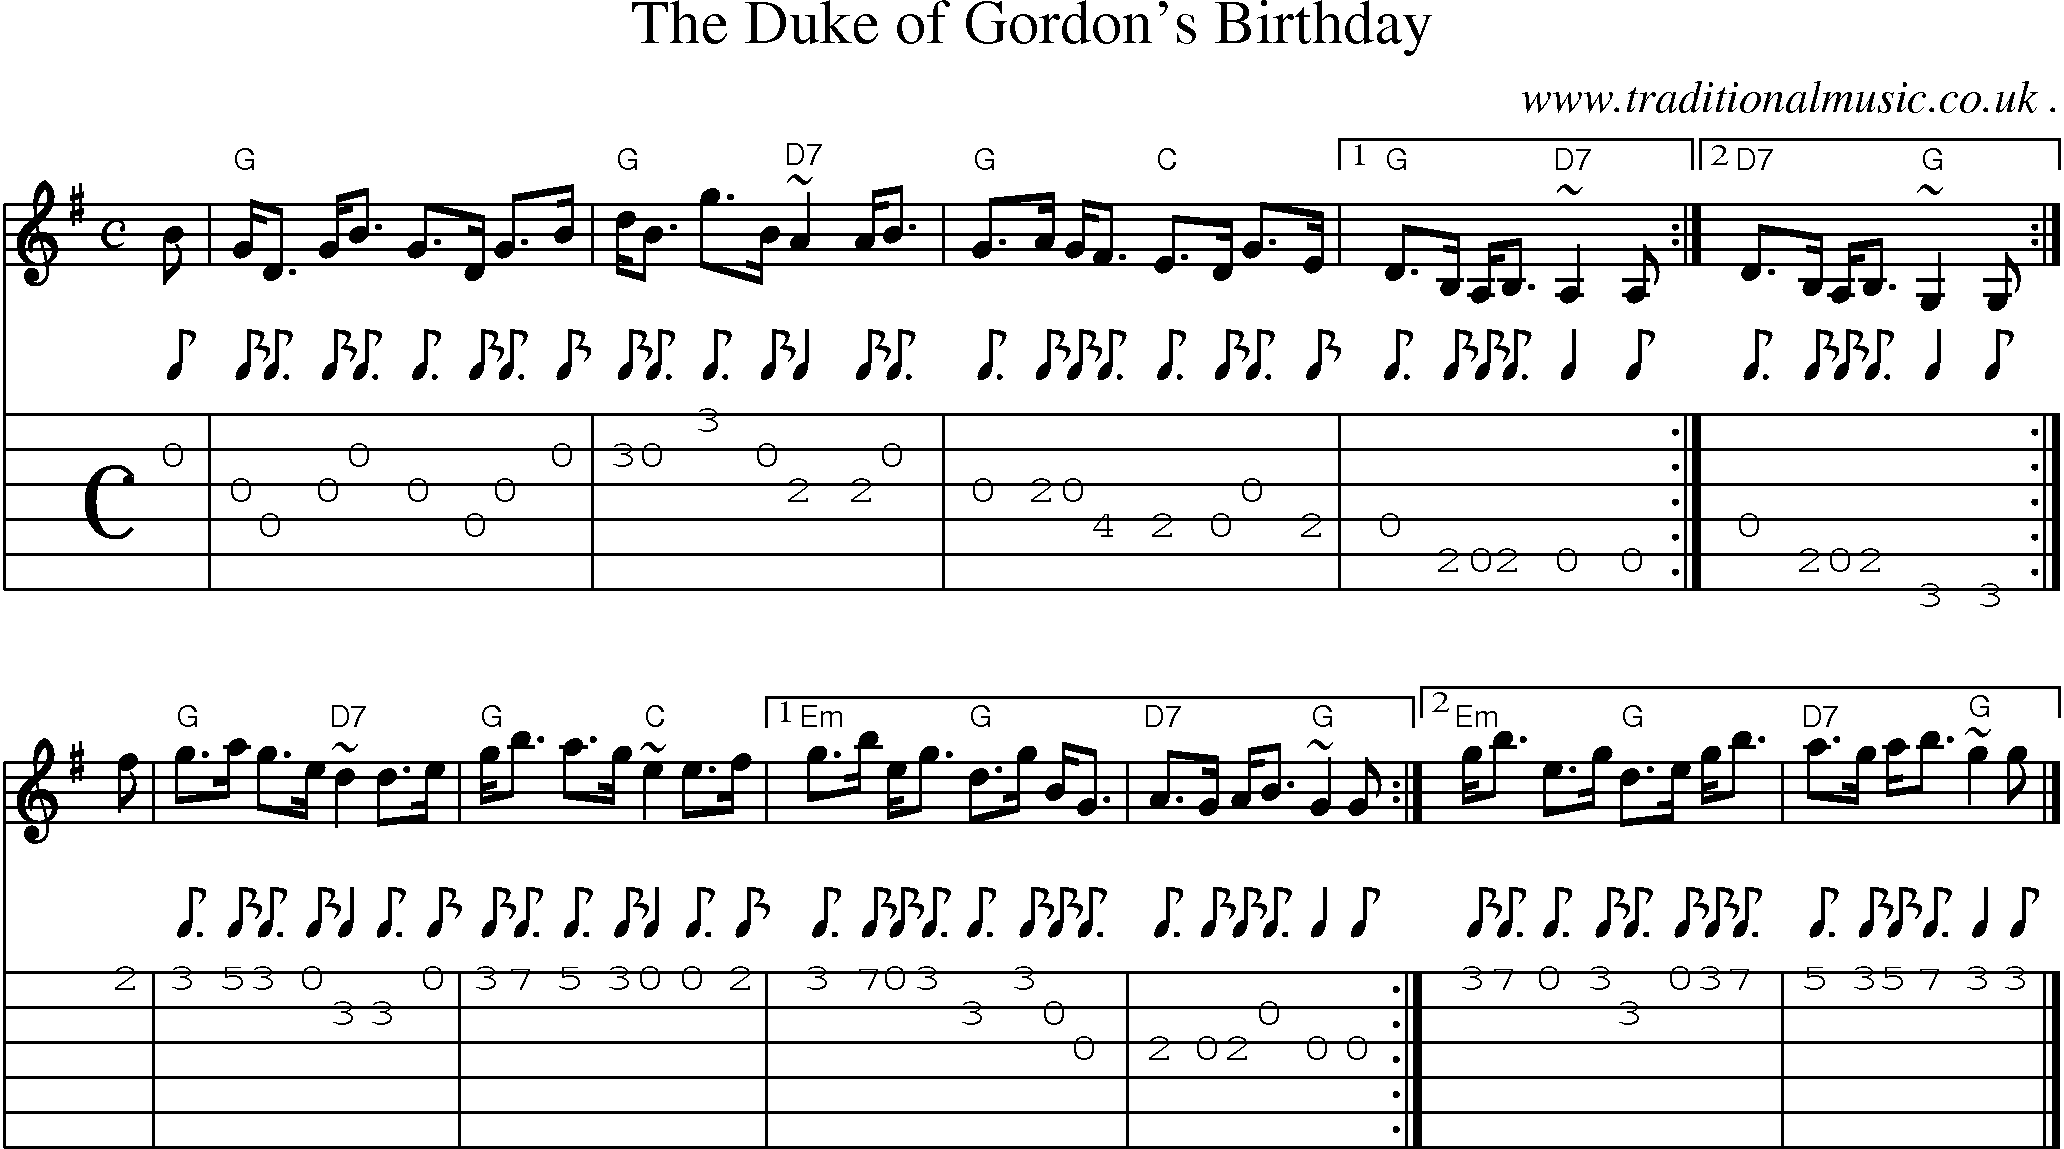 Sheet-music  score, Chords and Guitar Tabs for The Duke Of Gordons Birthday